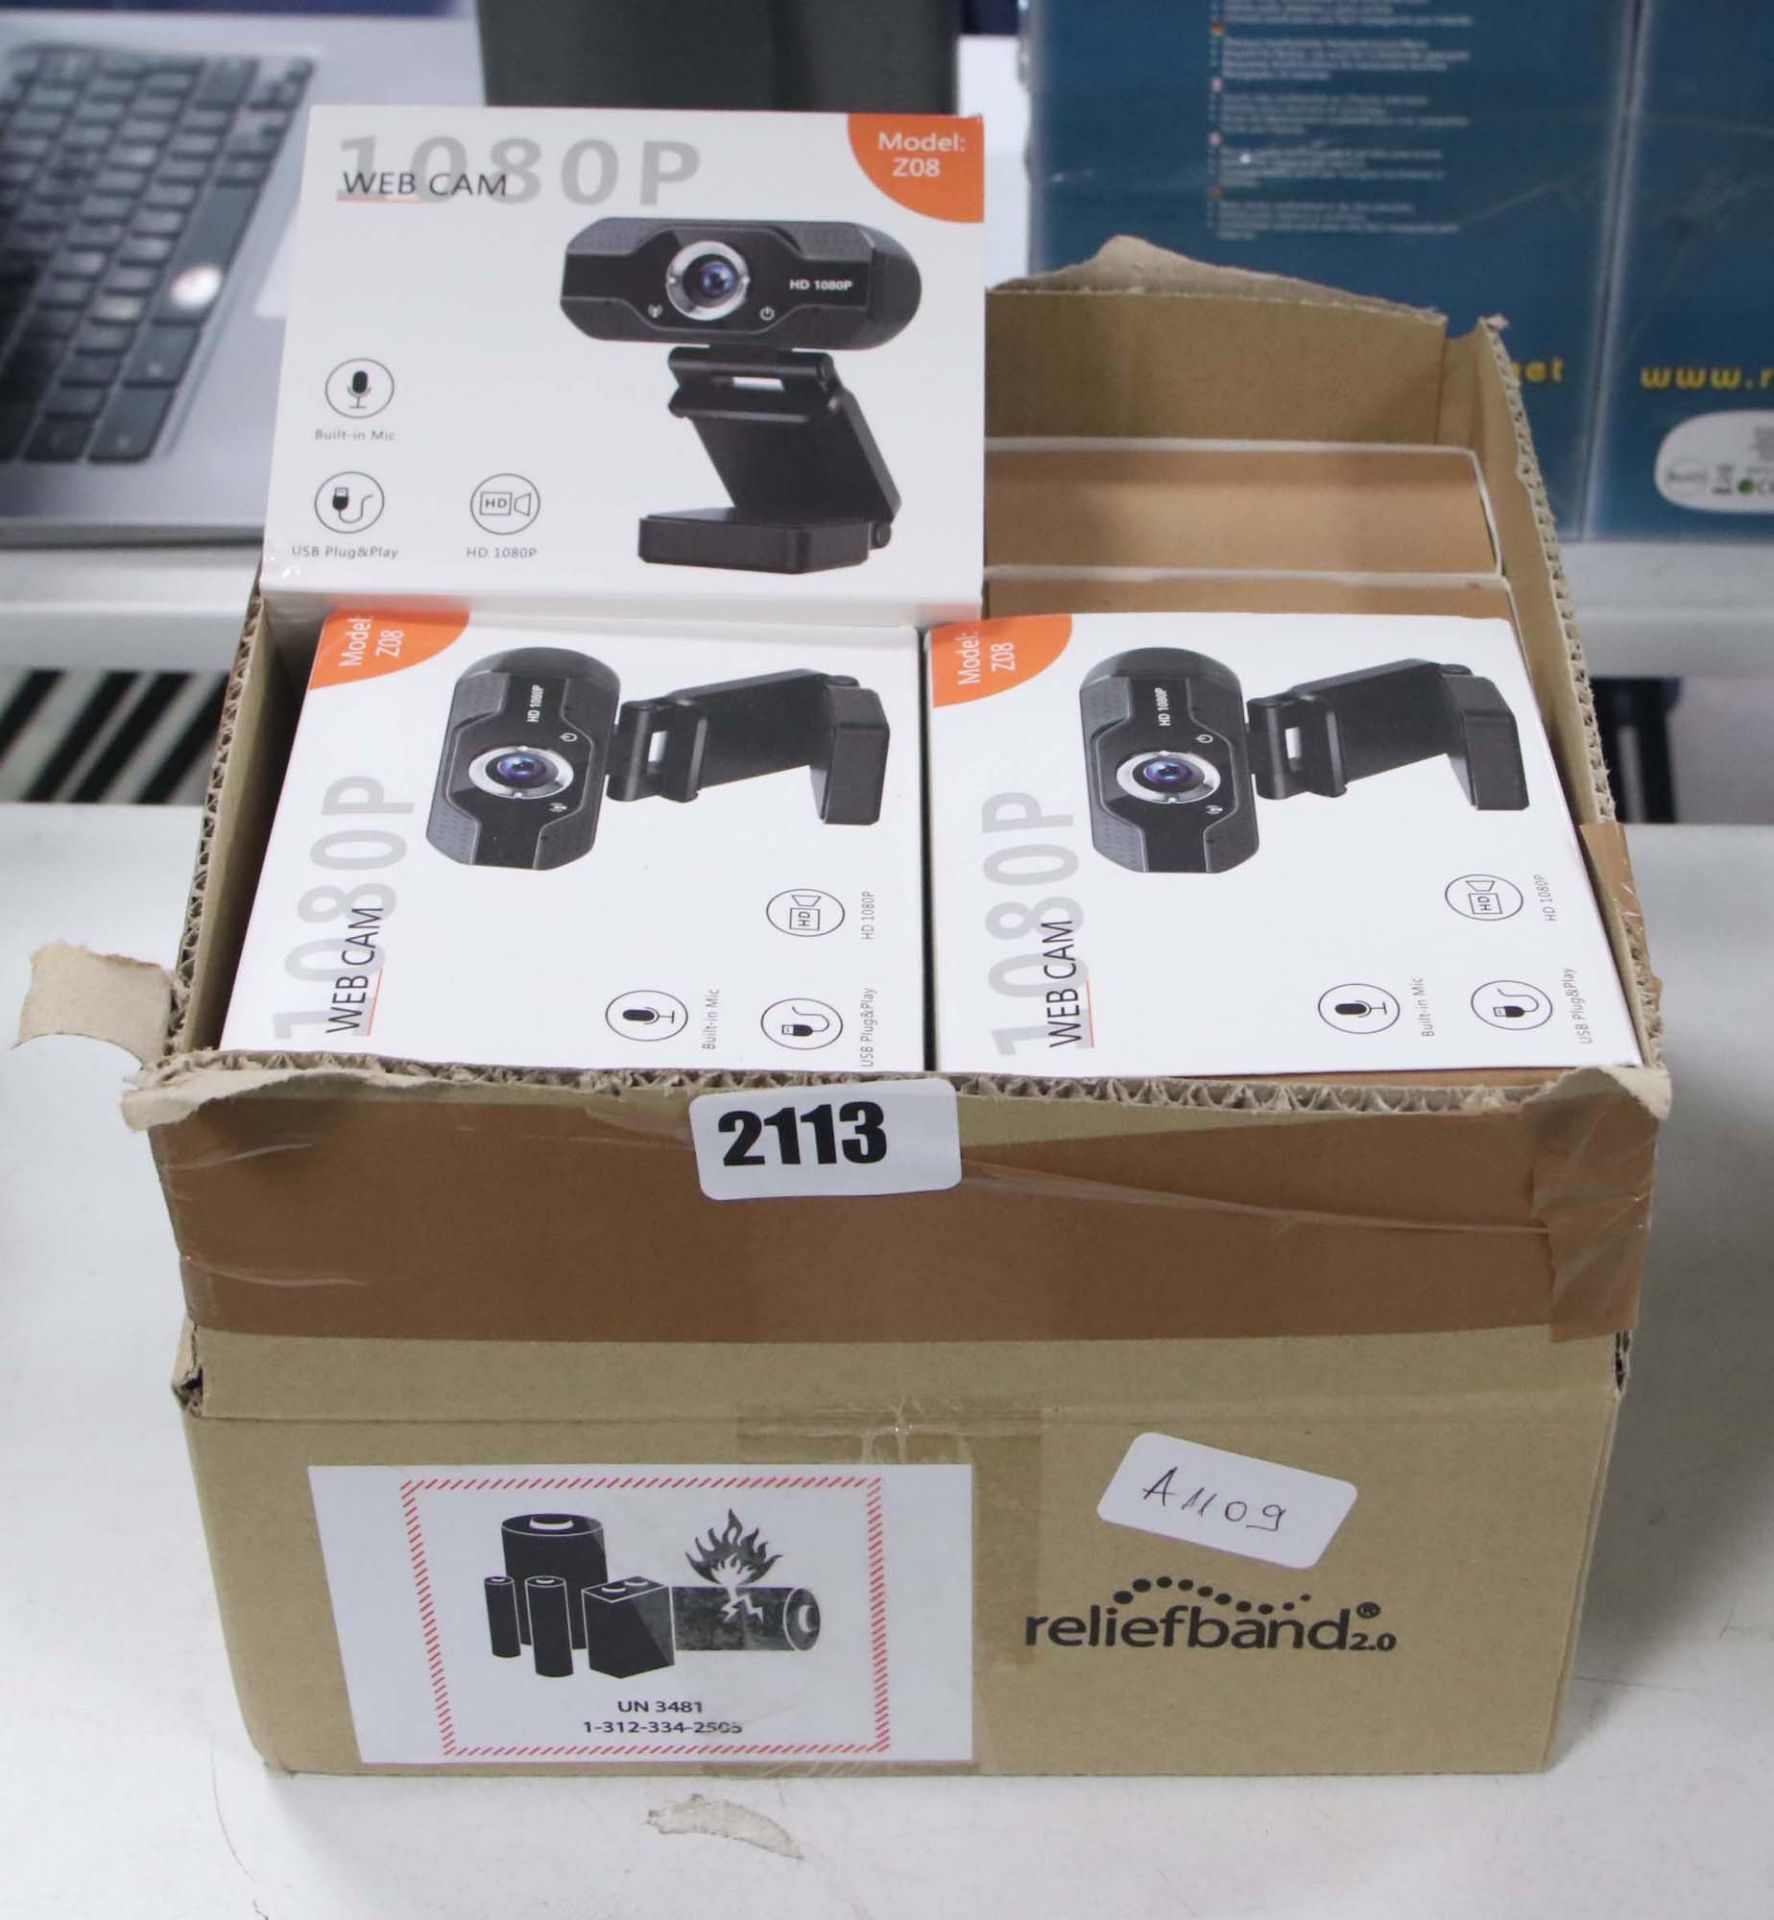 Box containing various model ZO8 1080p web cams